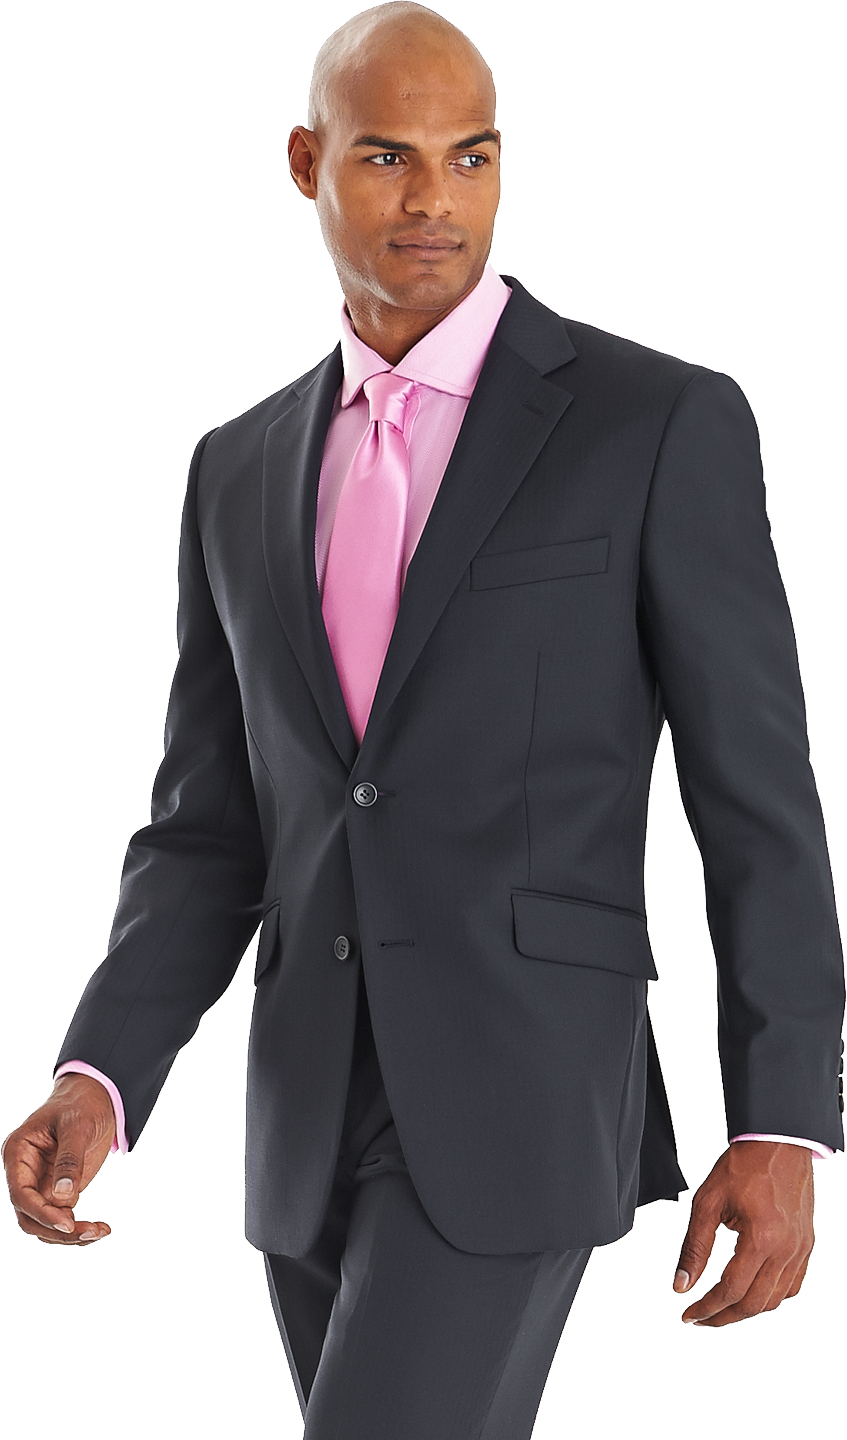 Black Suit Pink Tie PNG Image - PurePNG | Free transparent 